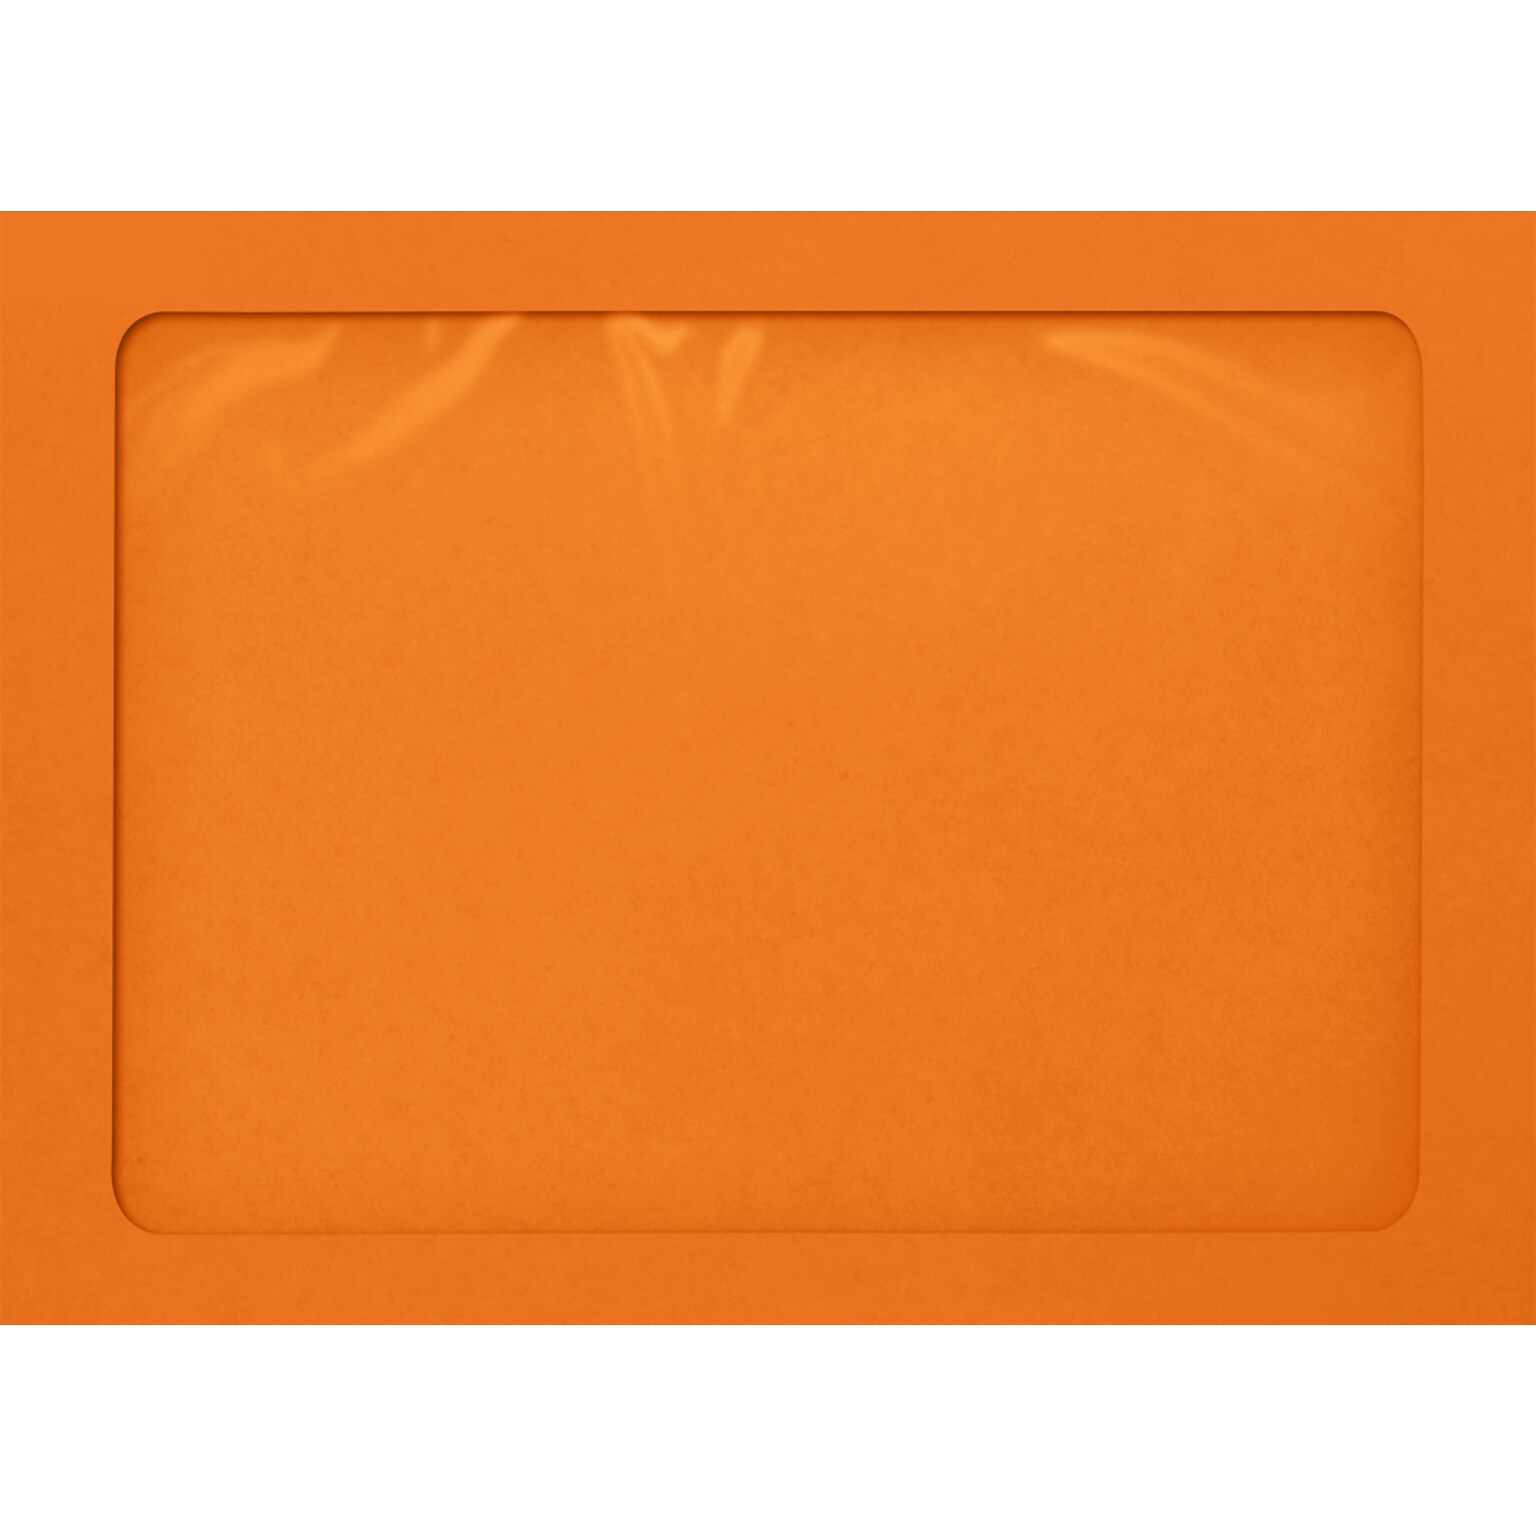 JAM Paper A7 Full Face Window Envelopes, Peel & Press, 5 1/4 x 7 1/4, Mandar,Orange, 50 Pack (A7FFW-55-50)